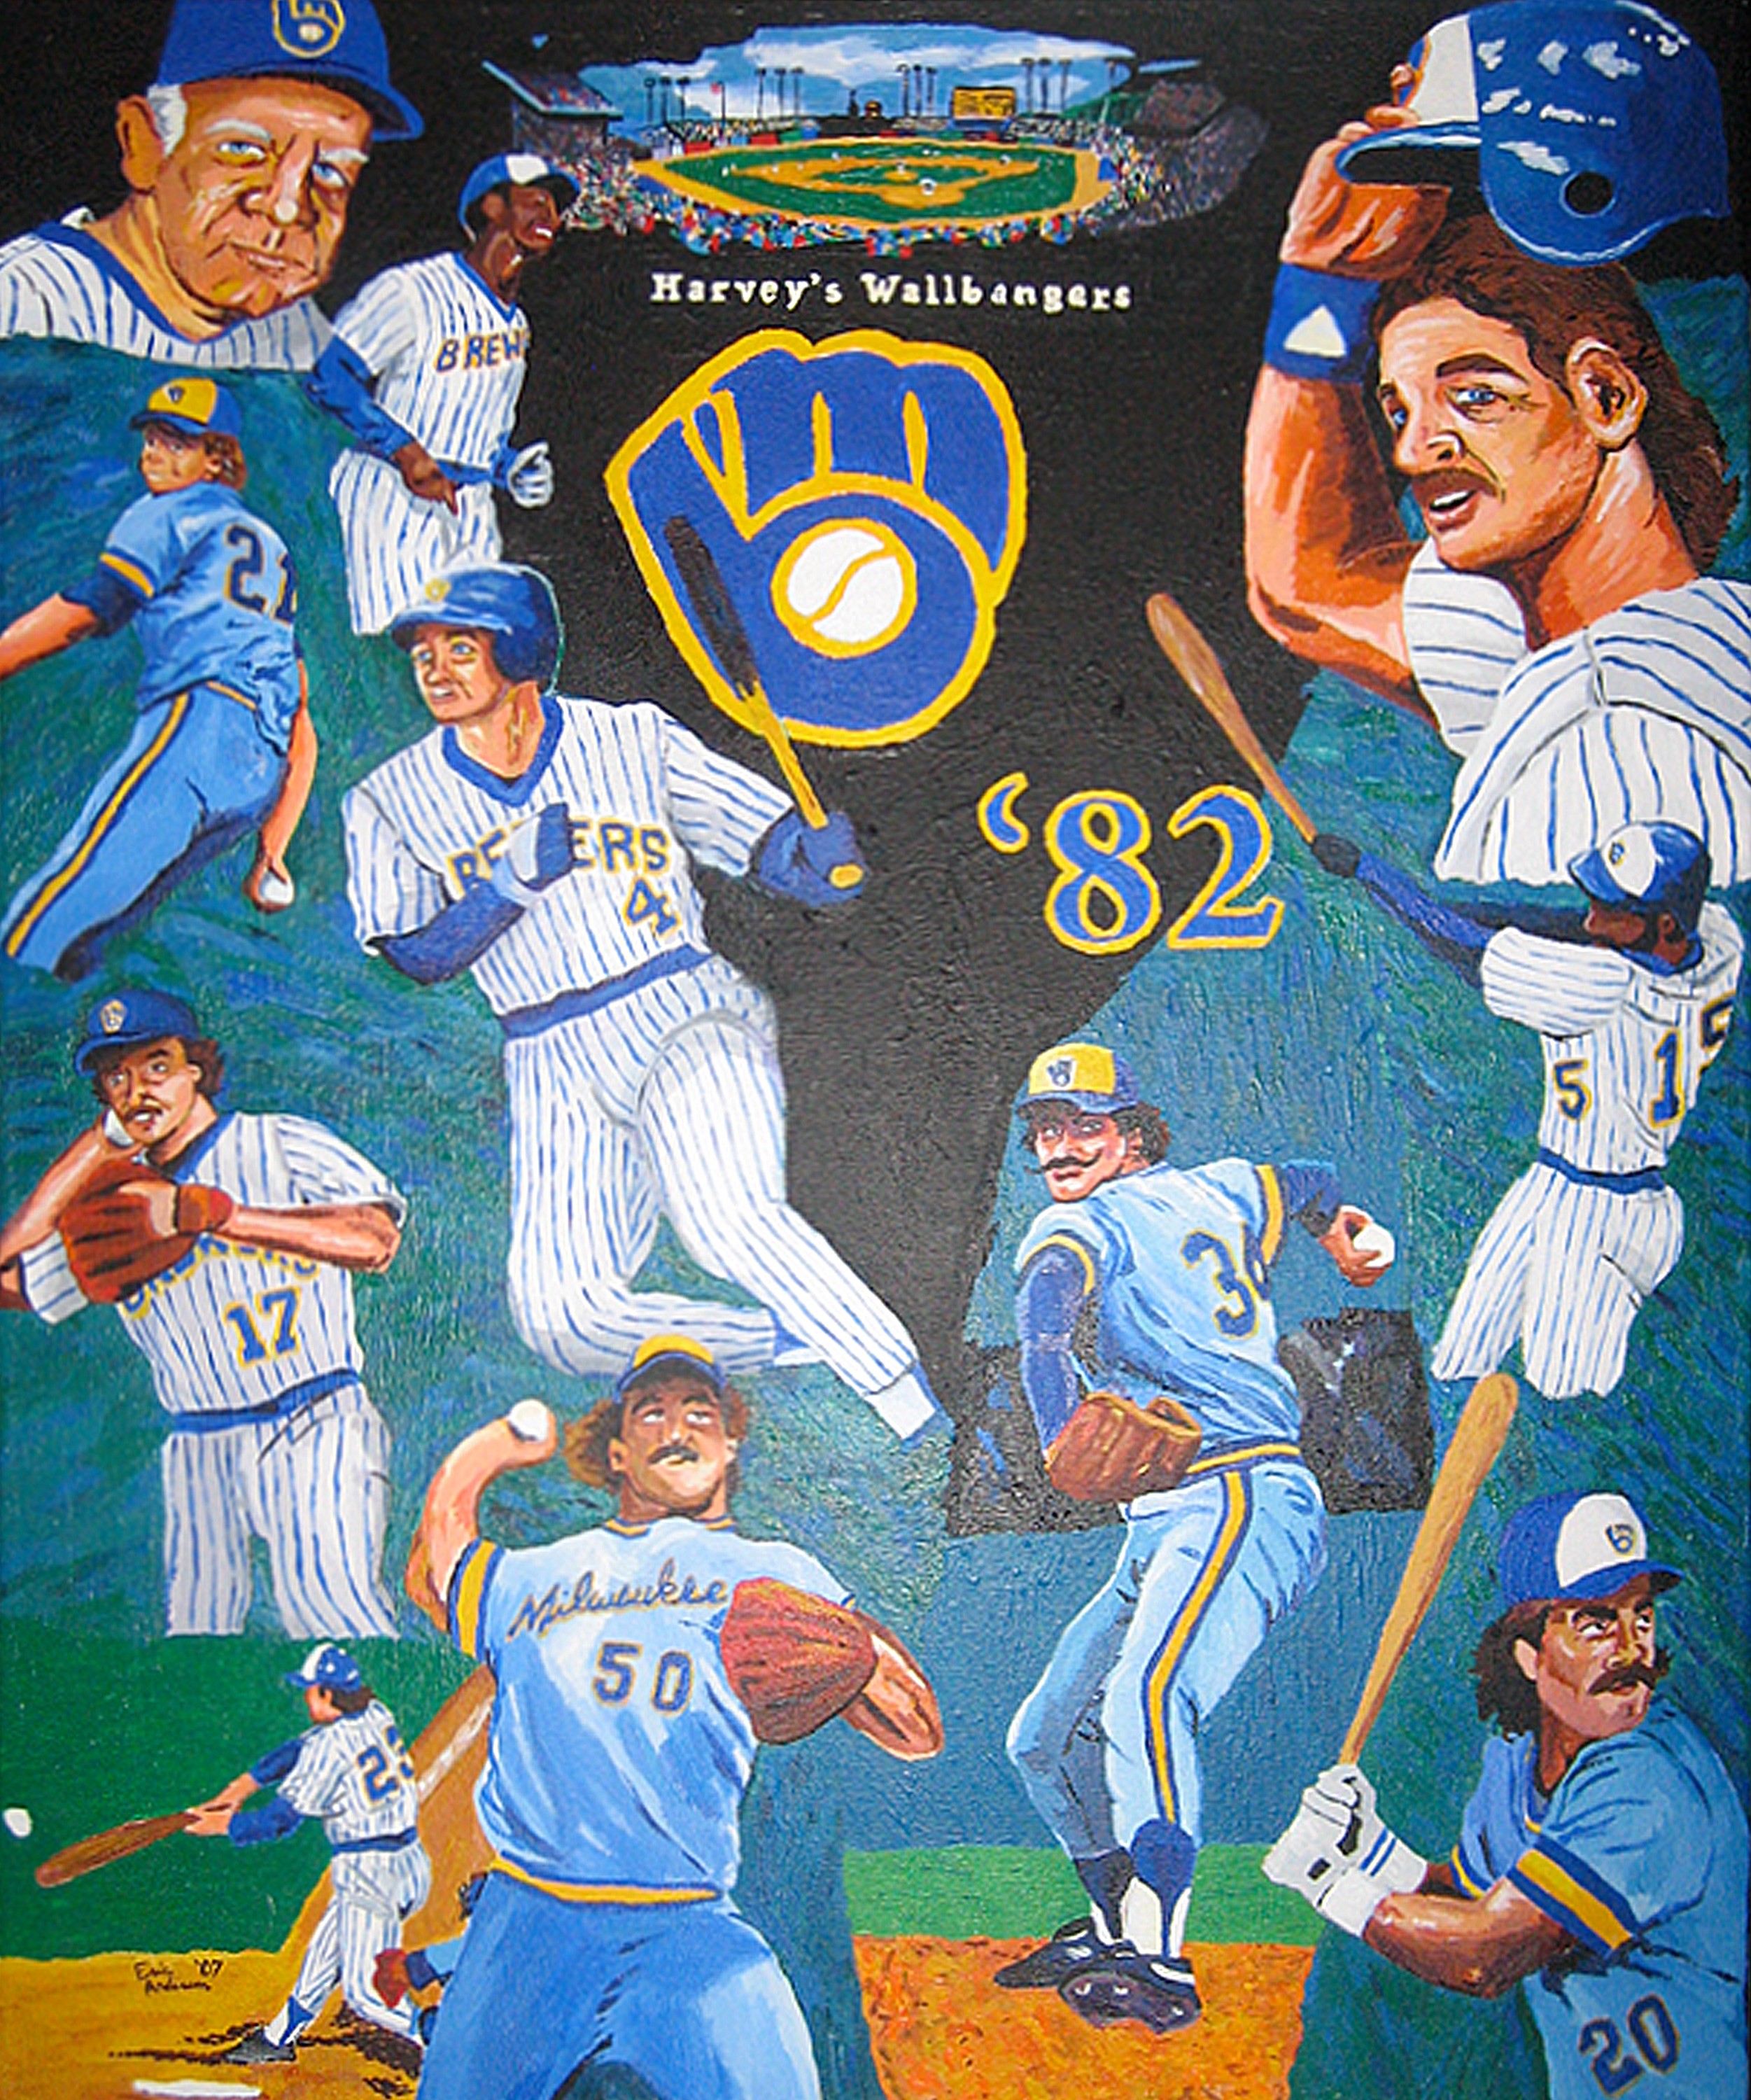 Don Money Milwaukee Brewers 1982 Home Baseball Throwback 